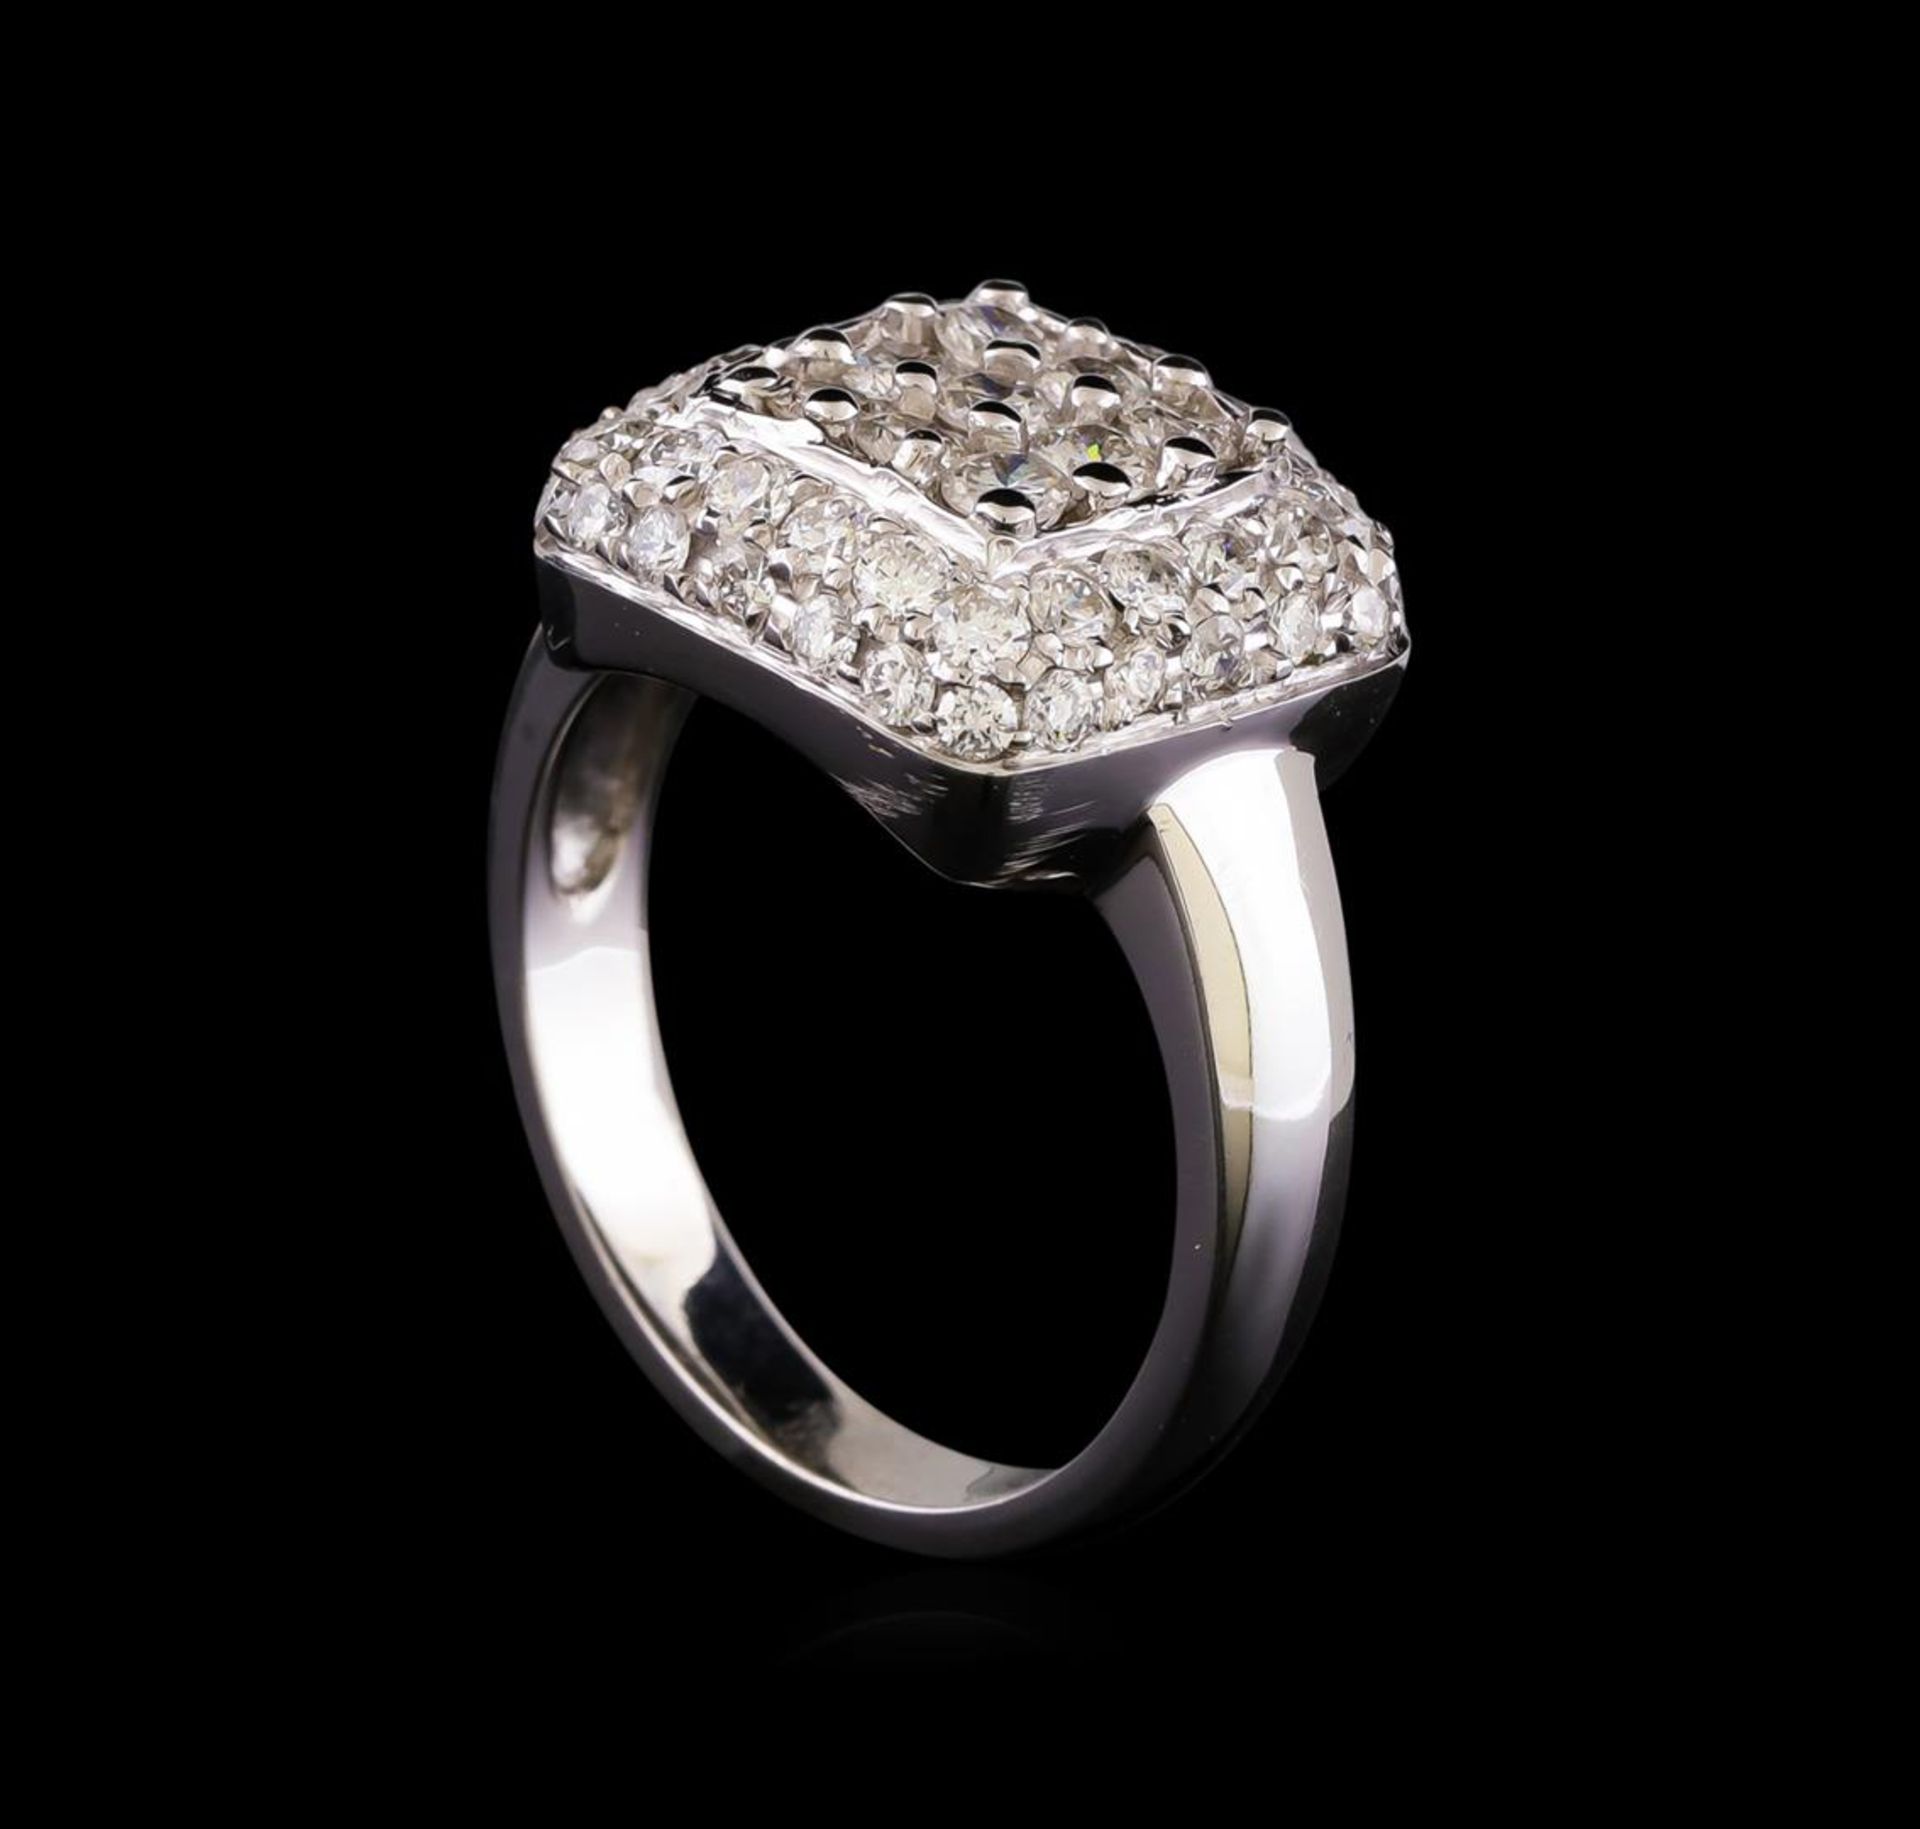 14KT White Gold 1.55 ctw Diamond Ring - Image 4 of 5